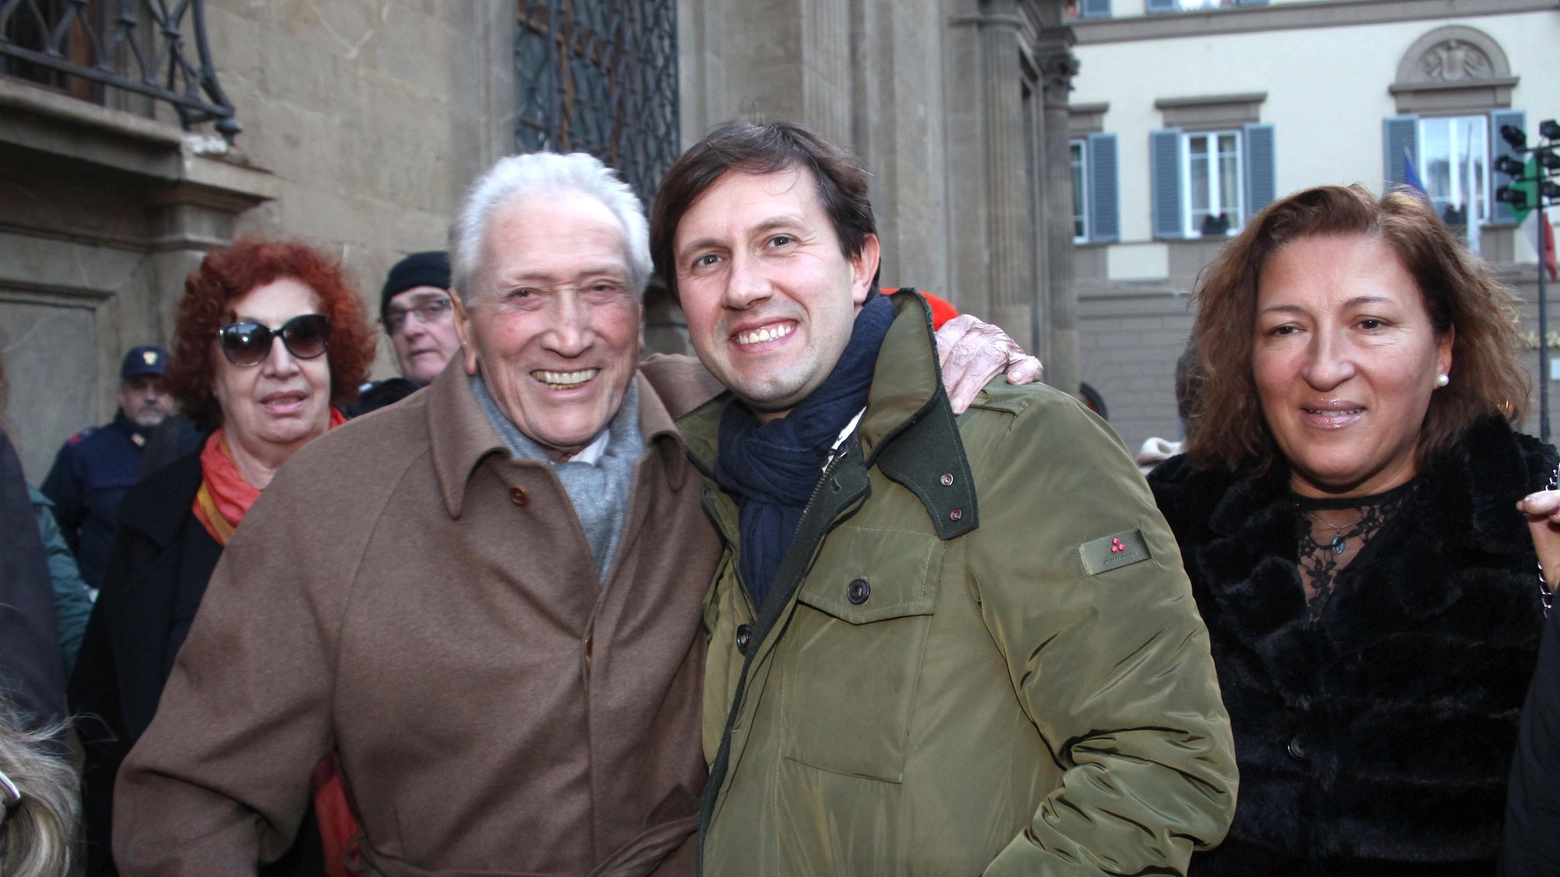 Narciso Parigi e Dario Nardella (Foto Umberto Visintinii/New Press Photo)